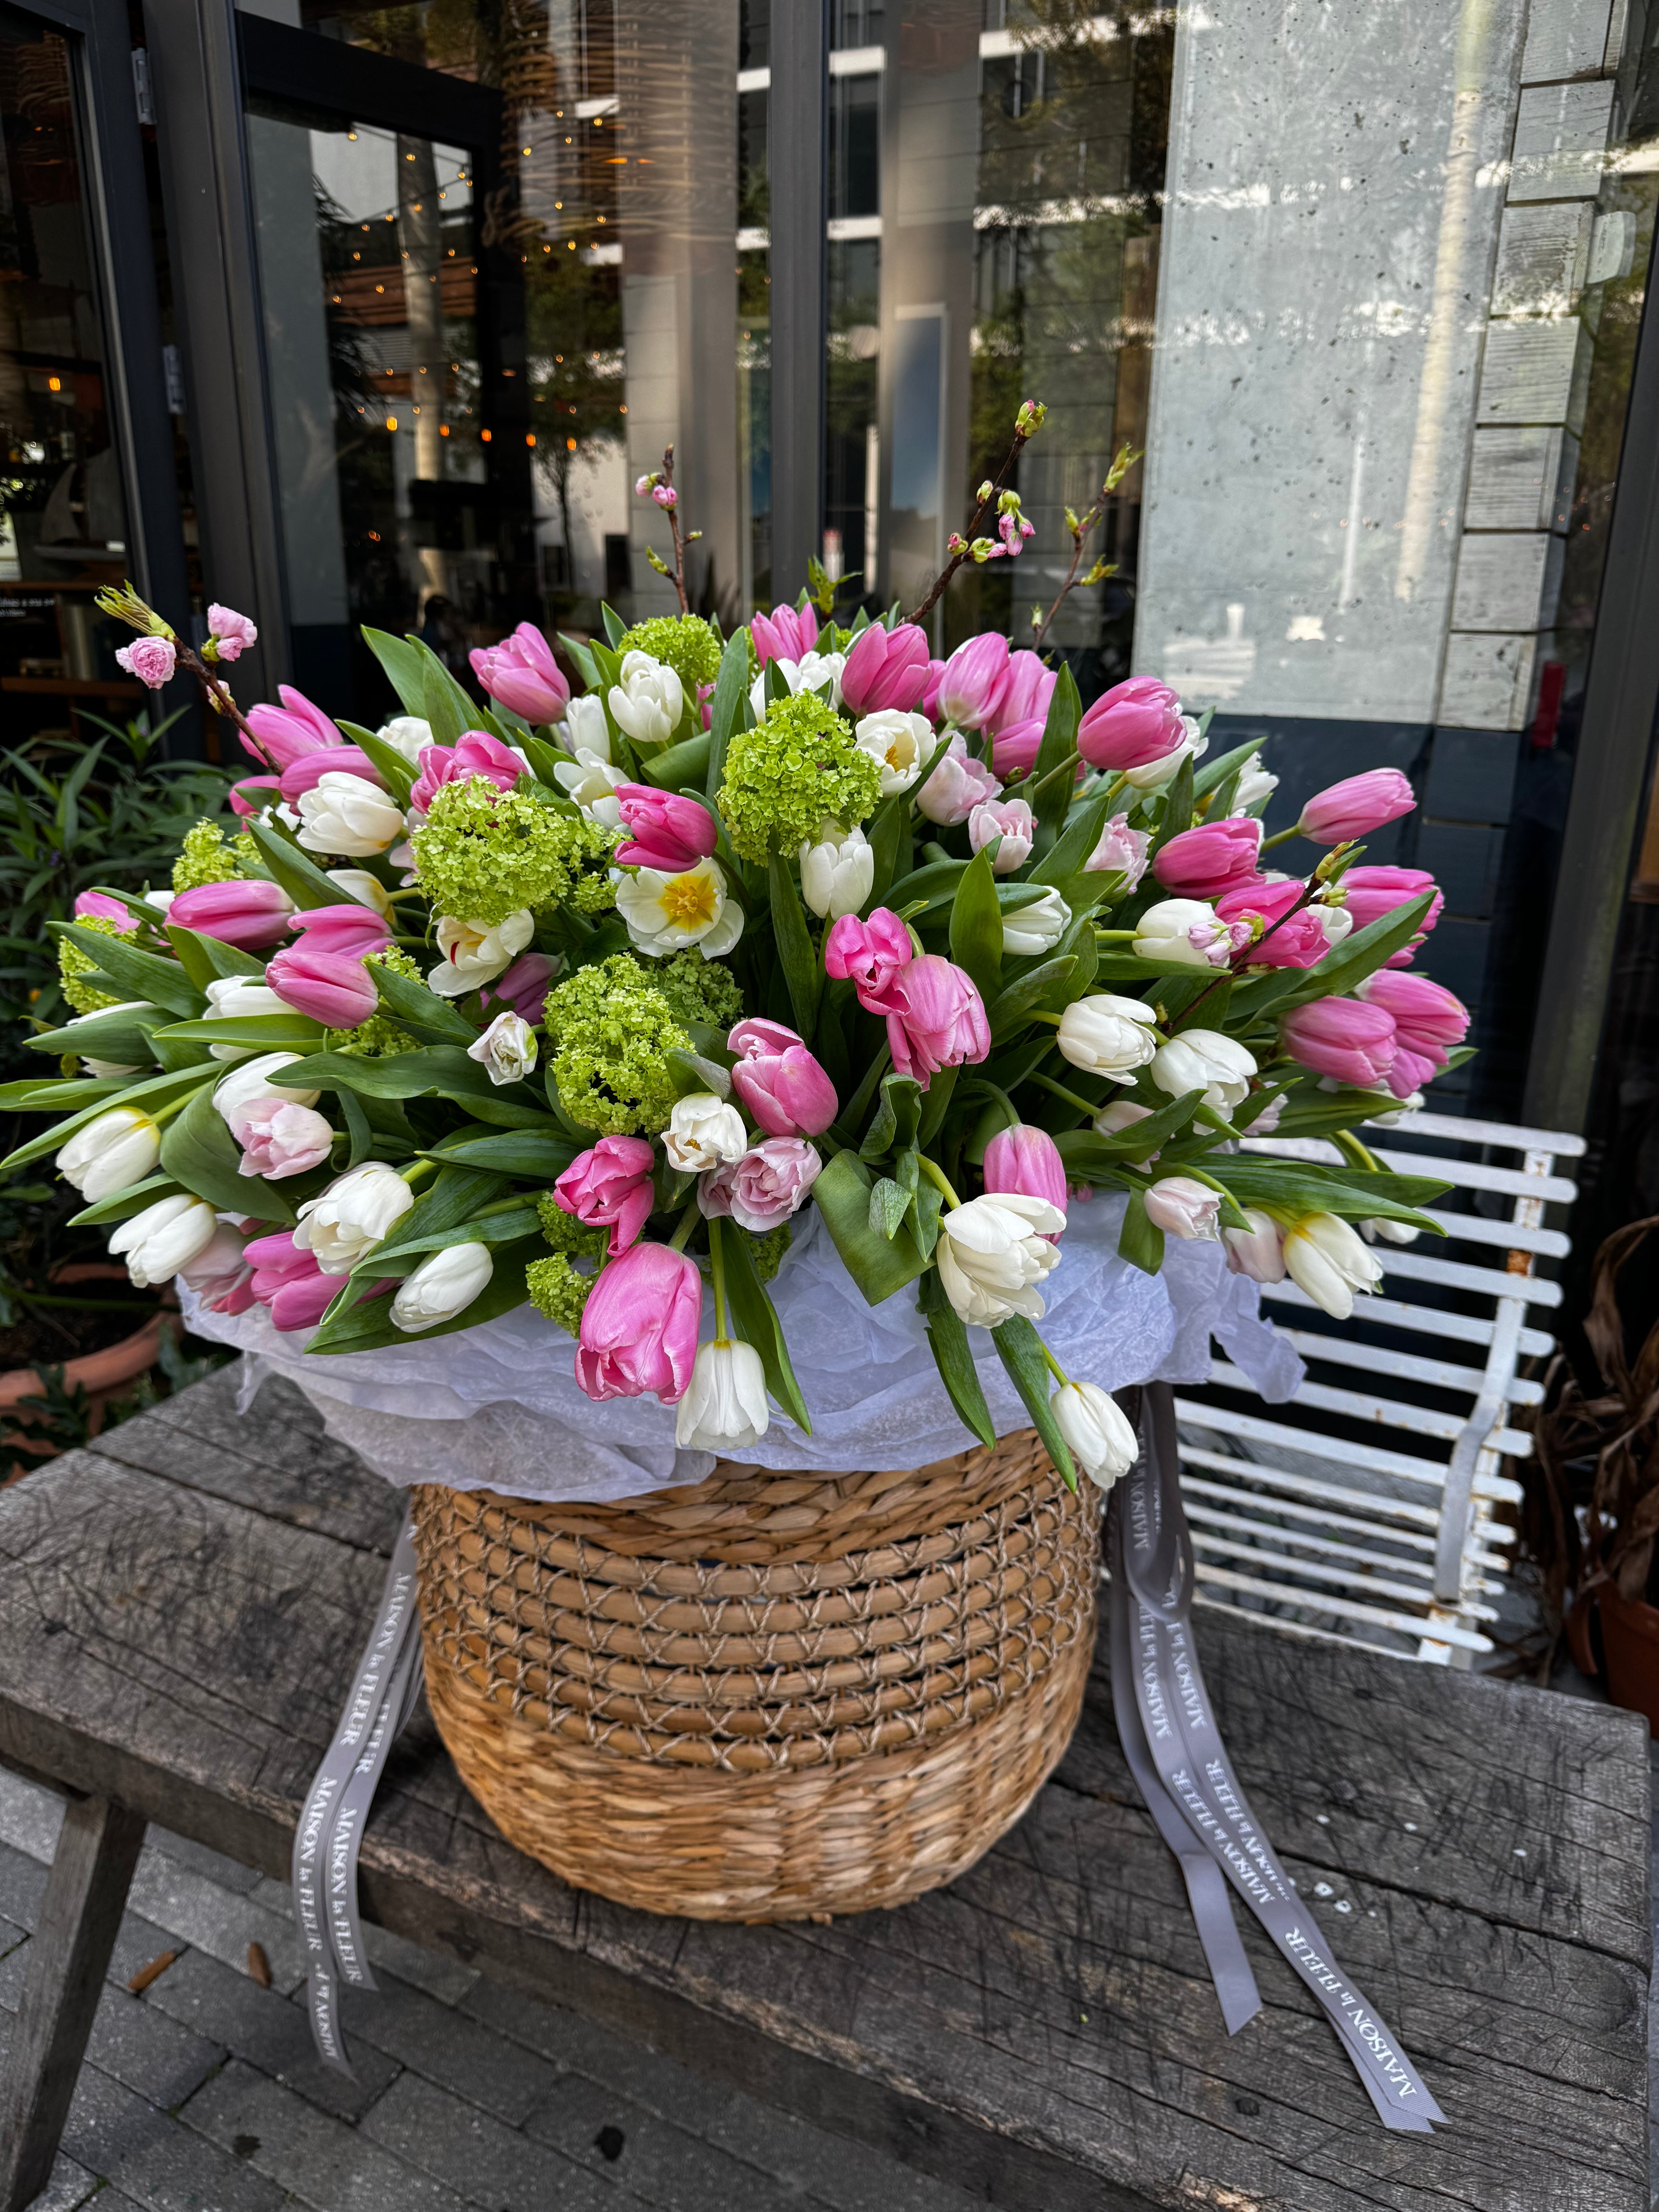 Bed of Tulips - Beautiful 200 Dutch tulips and Viburnum